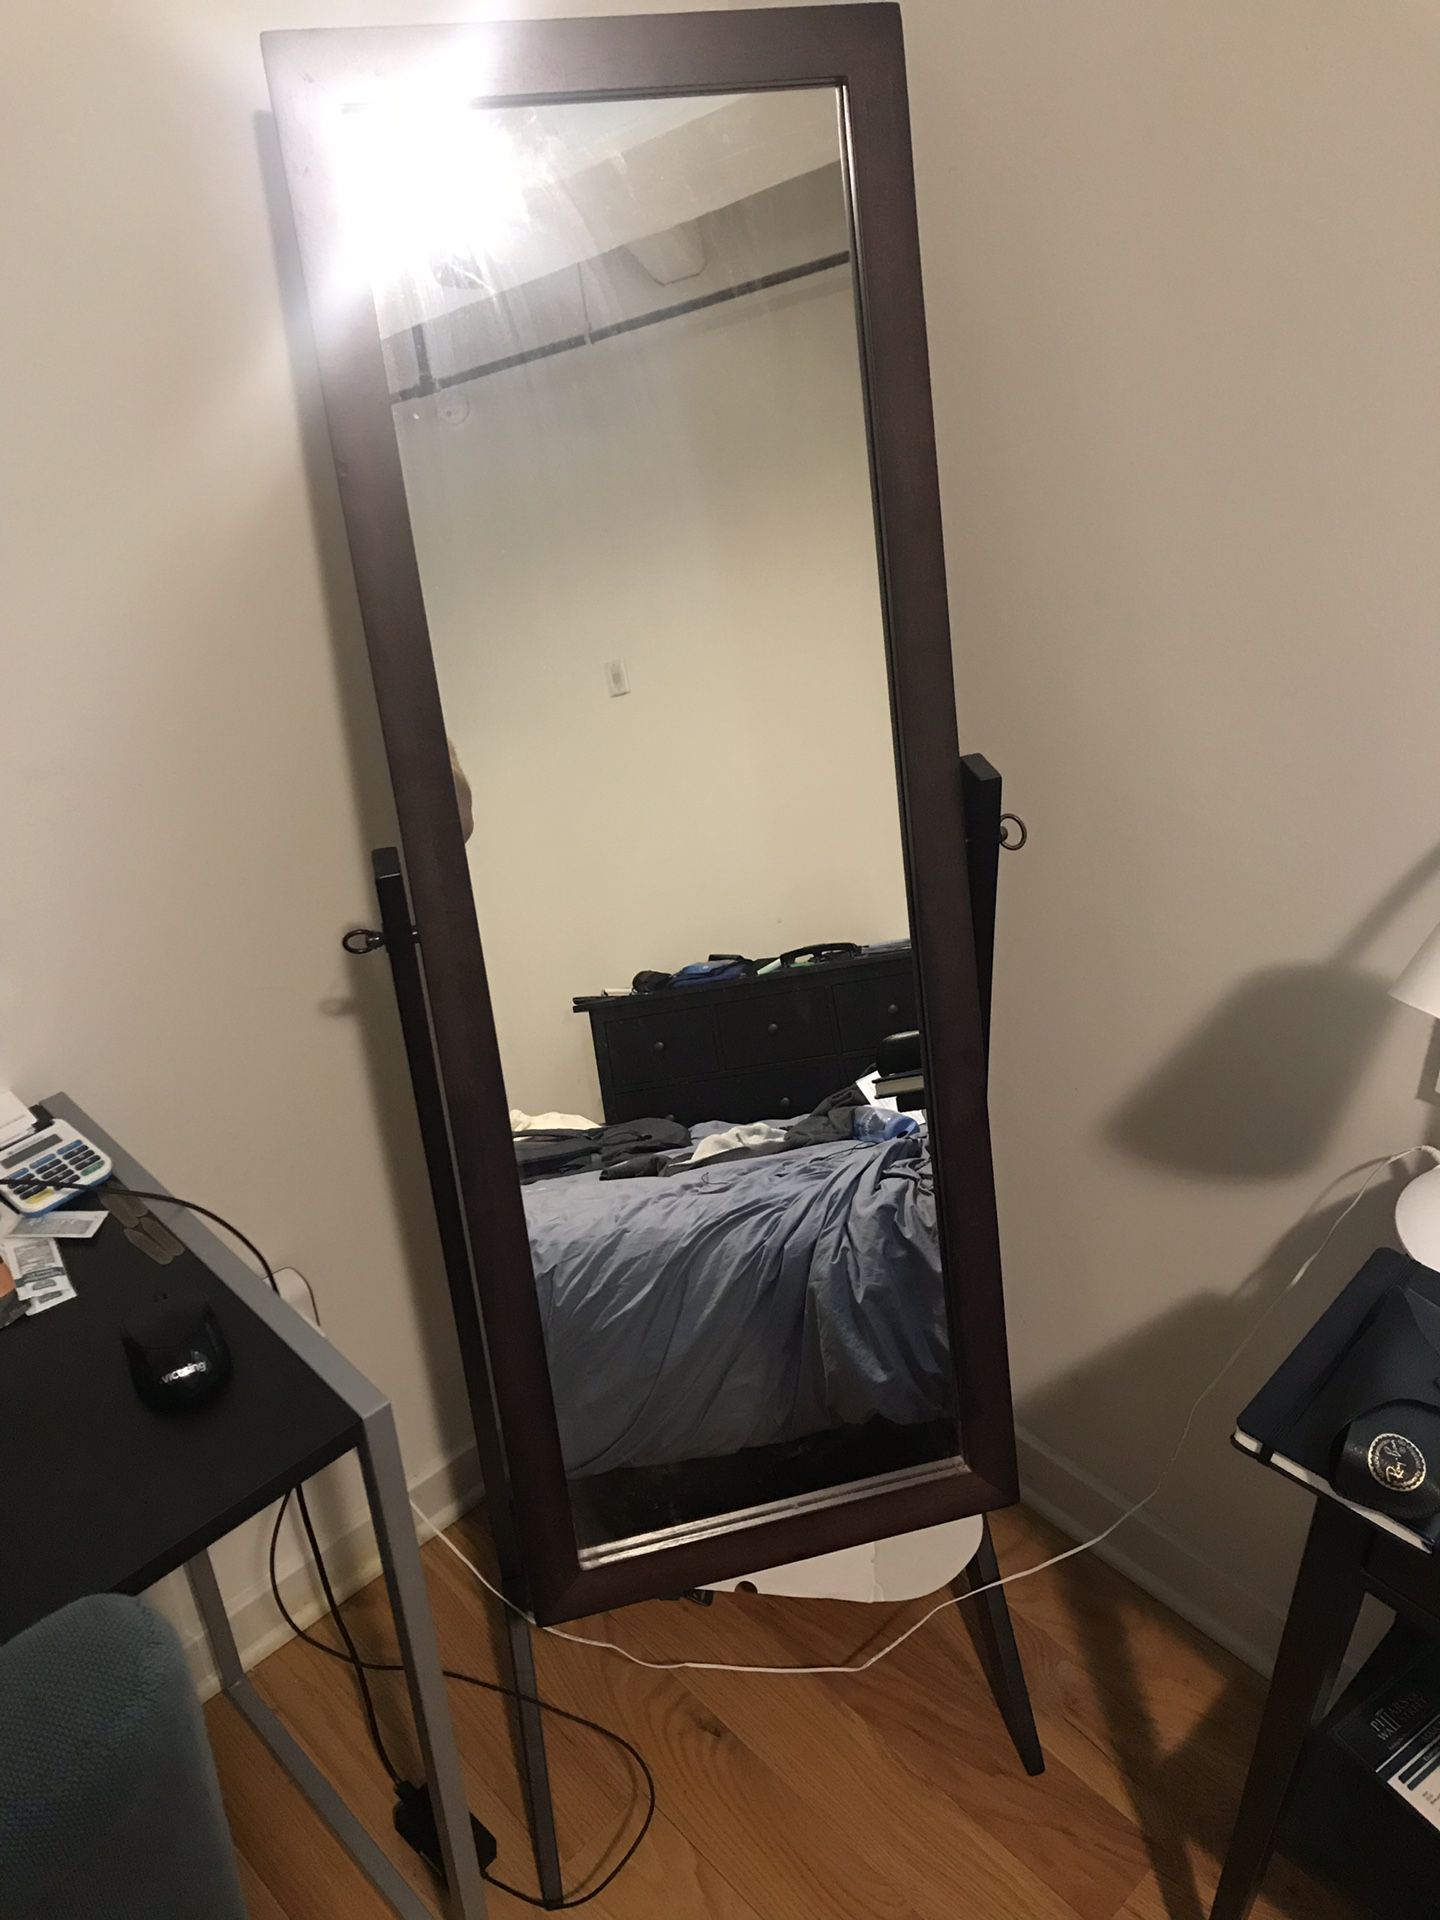 Full sized mirror